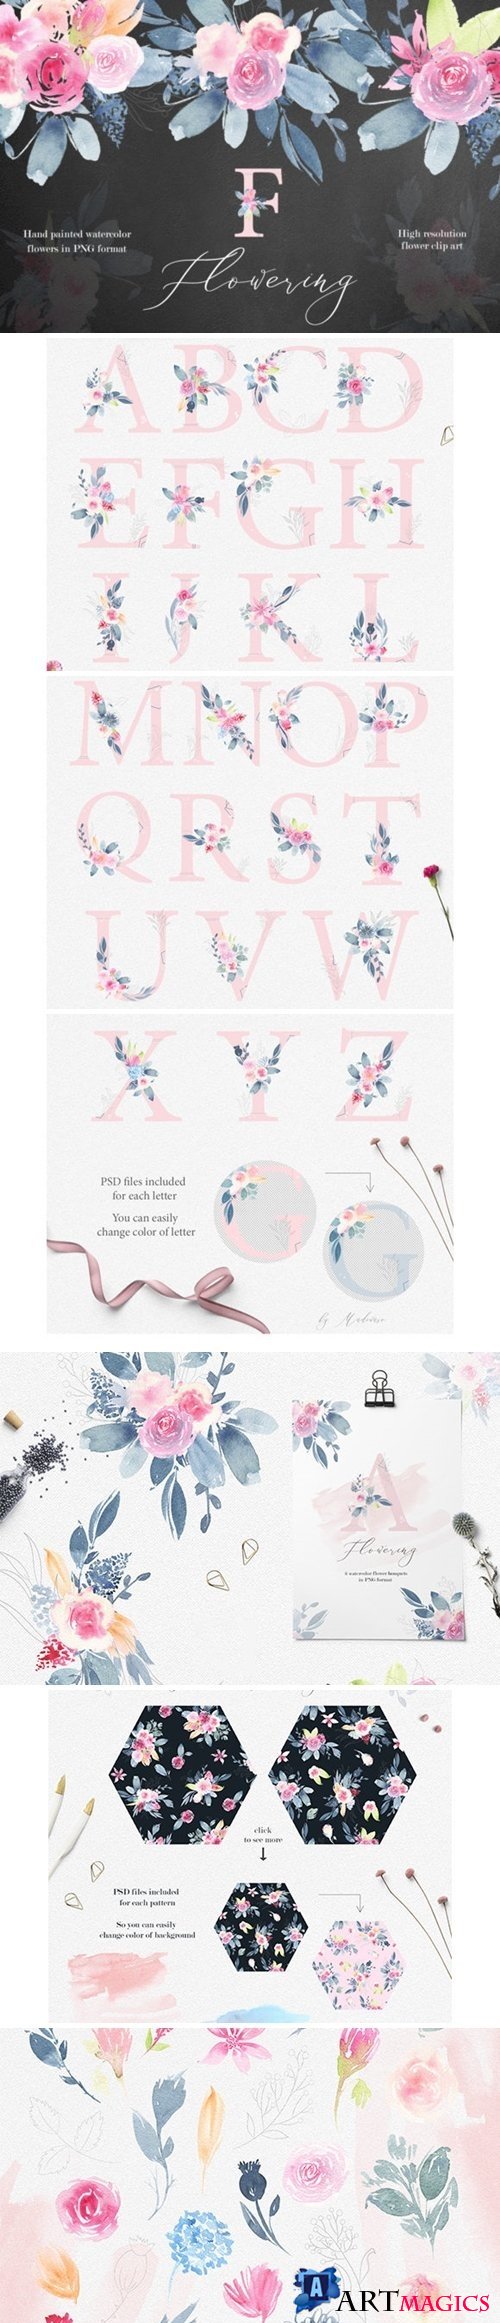 Flowering watercolor graphic set - 2558403